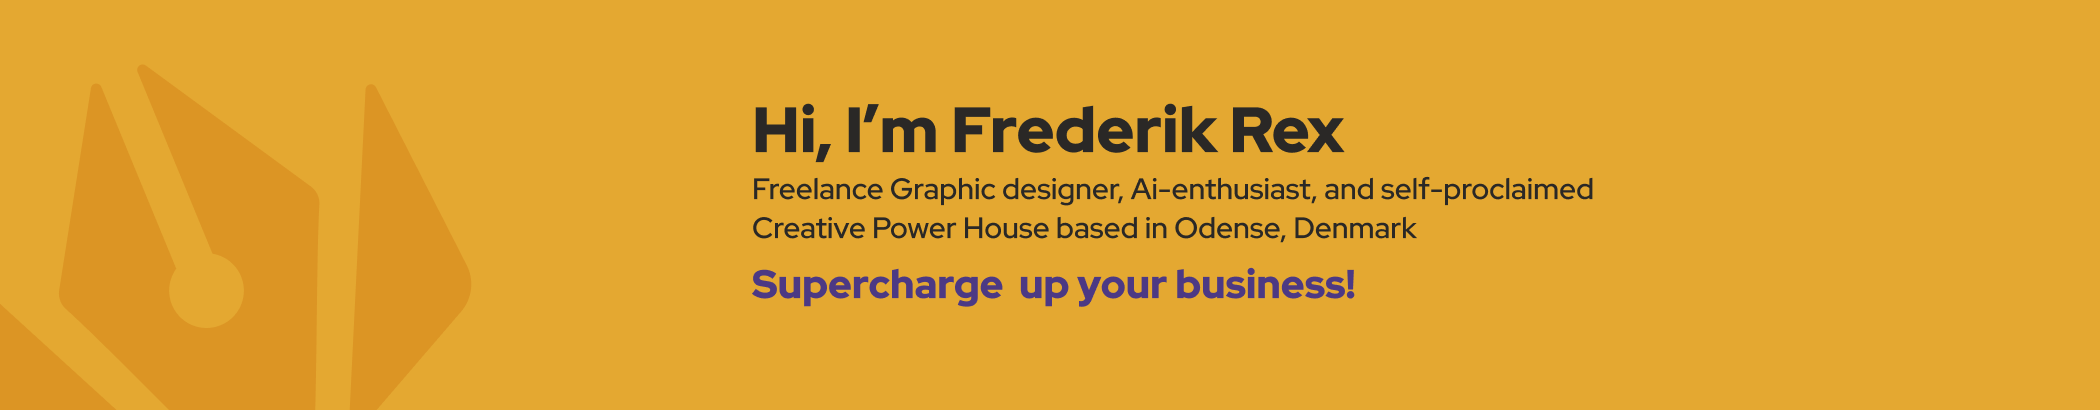 Banner de perfil de Frederik Rex